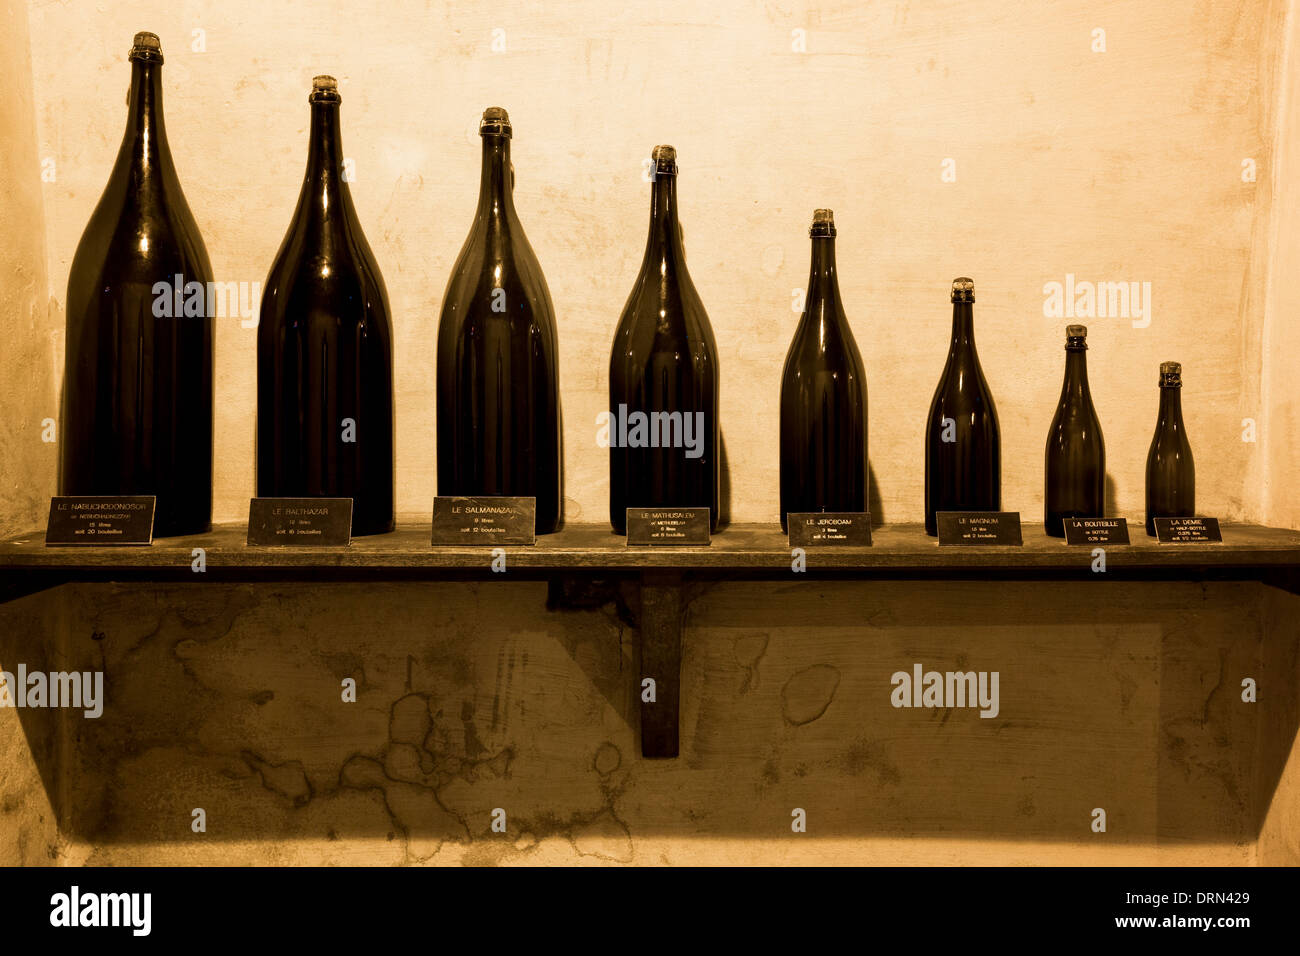 Demie, Magnum, Jeroboam, Methusalem, Balthazar, Salmanazar, Nebuchadnezzar bottles at Champagne Taittinger in Reims, France Stock Photo